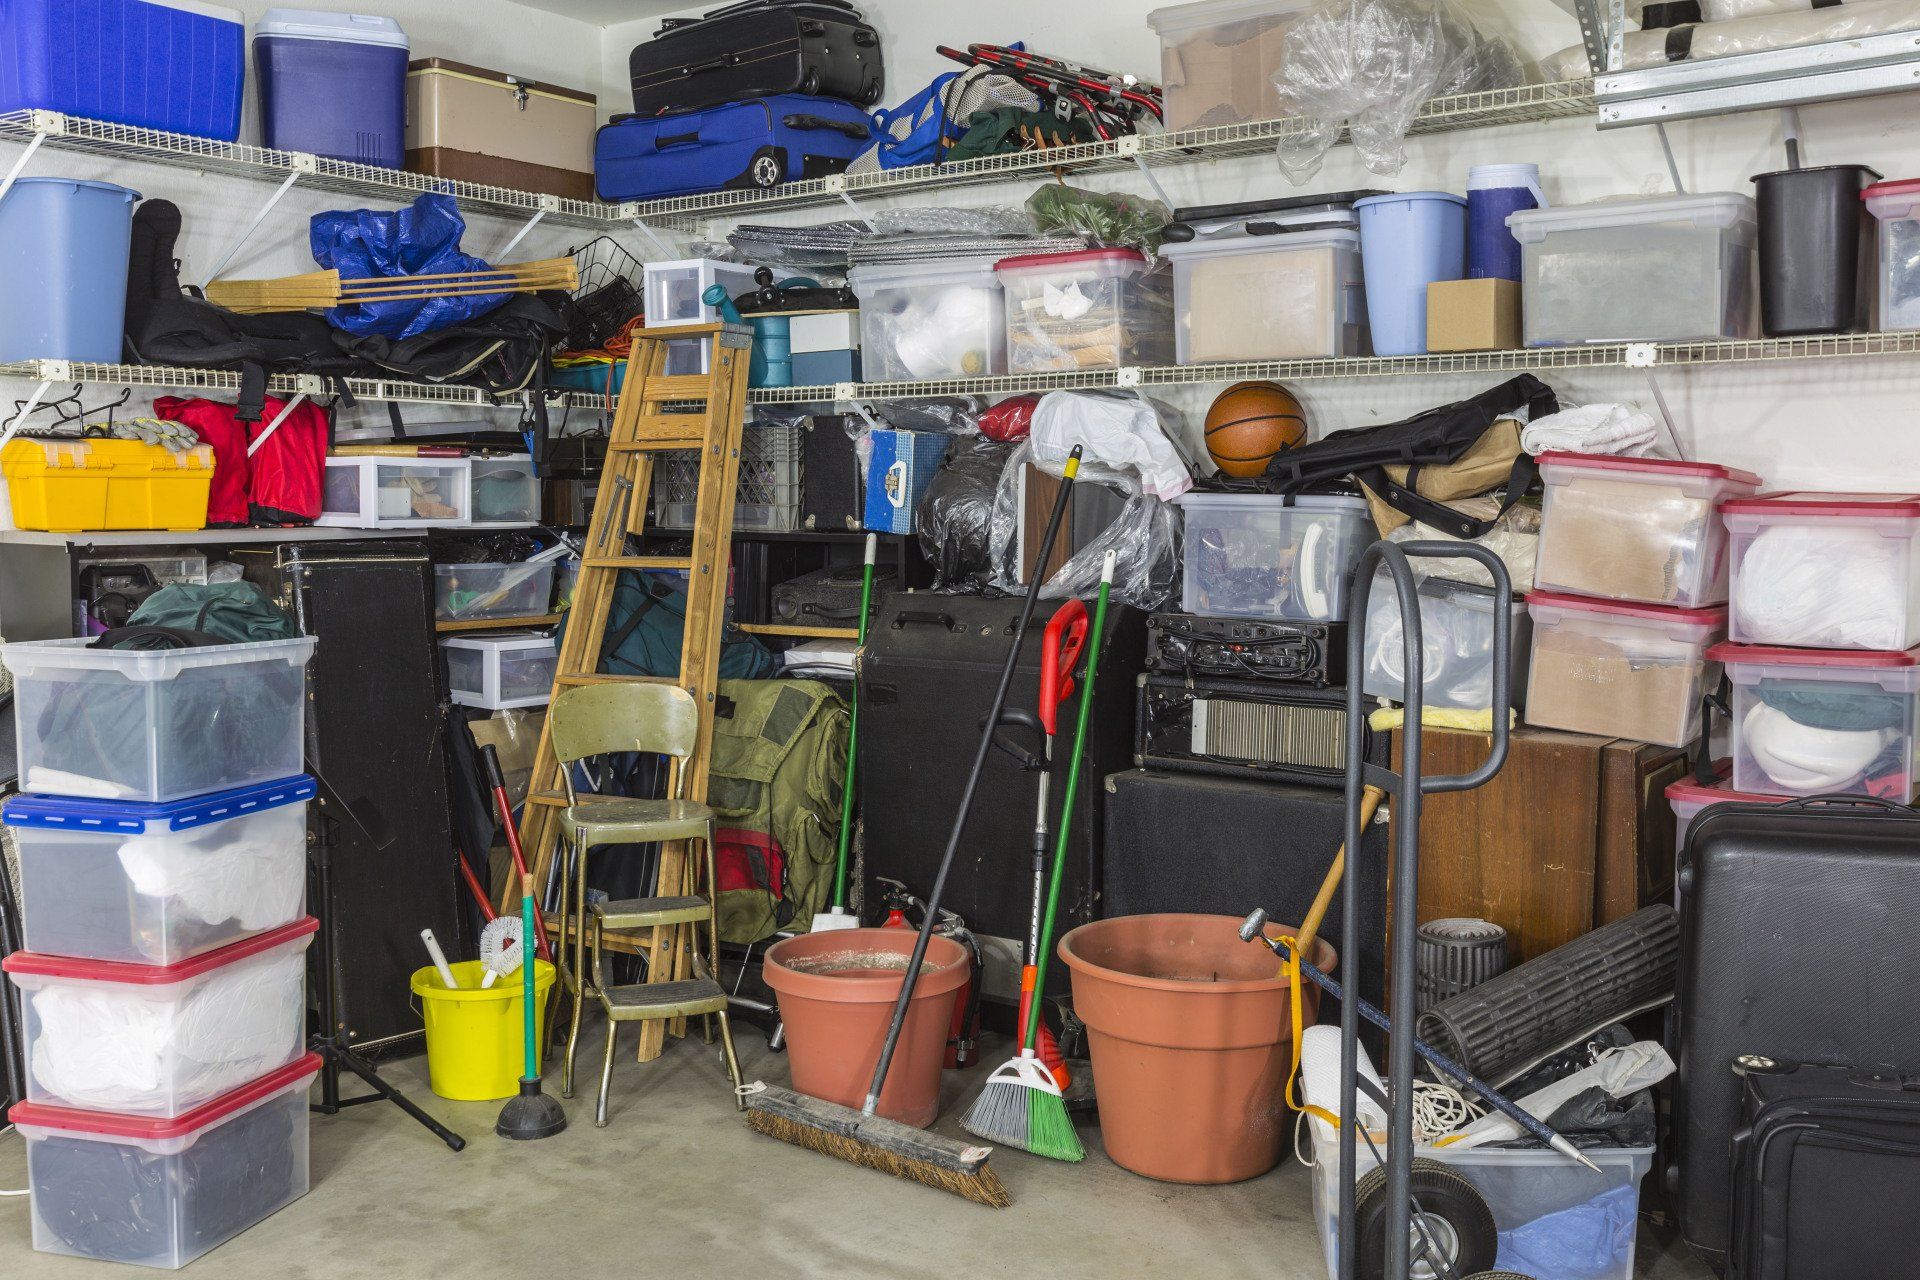 garage cabinetry